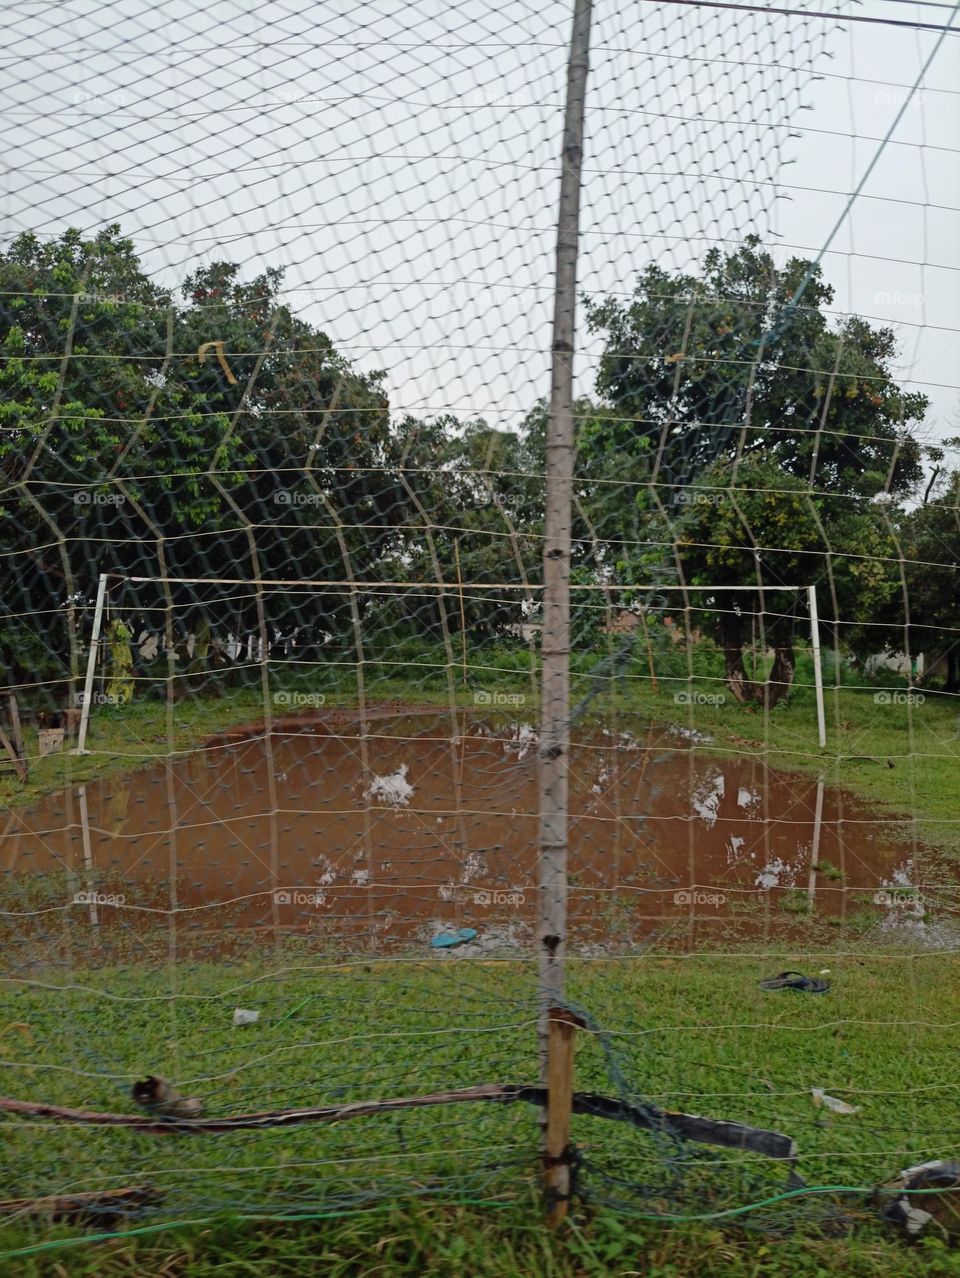 Simple Football Yard At The Village